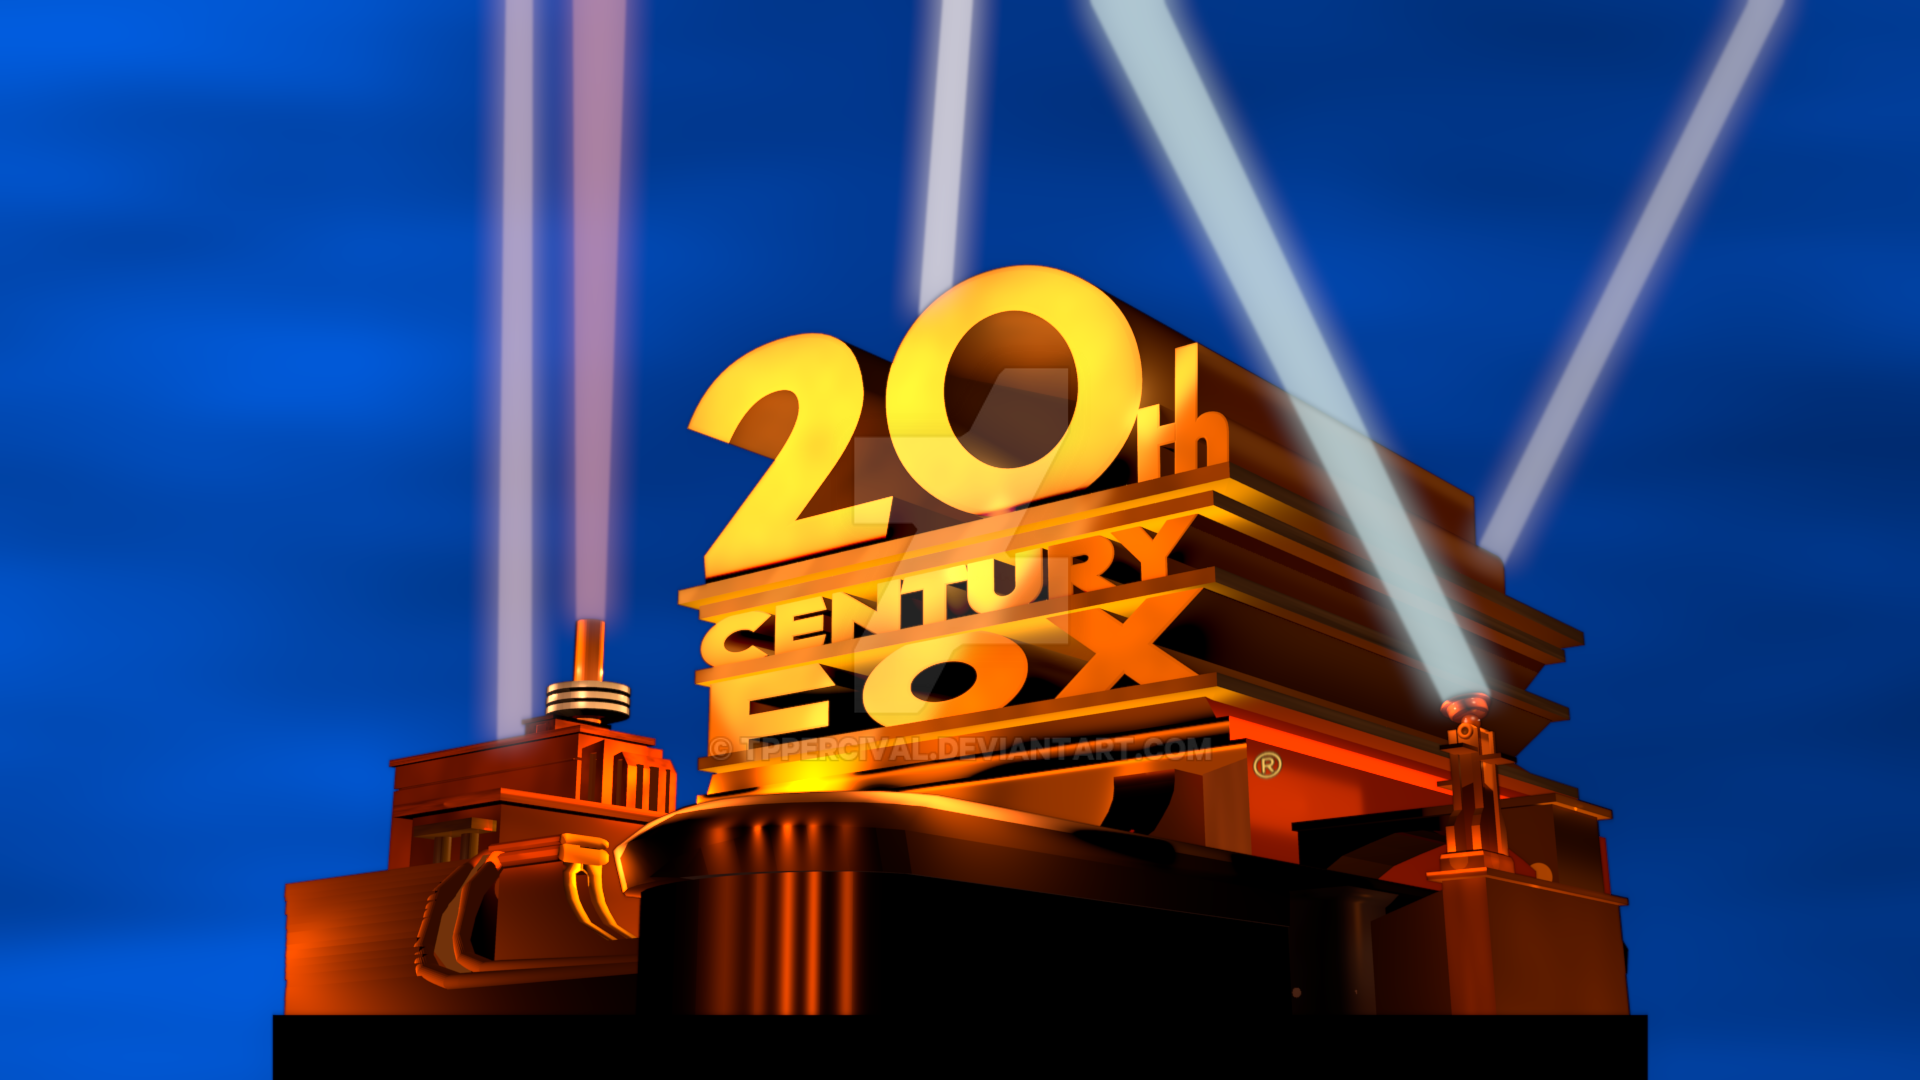 Заставка fox. Century Fox 20th зажигалка. 20th Century Fox 1993. MLG 20th Century Fox. 20th Century Fox Television 2001.